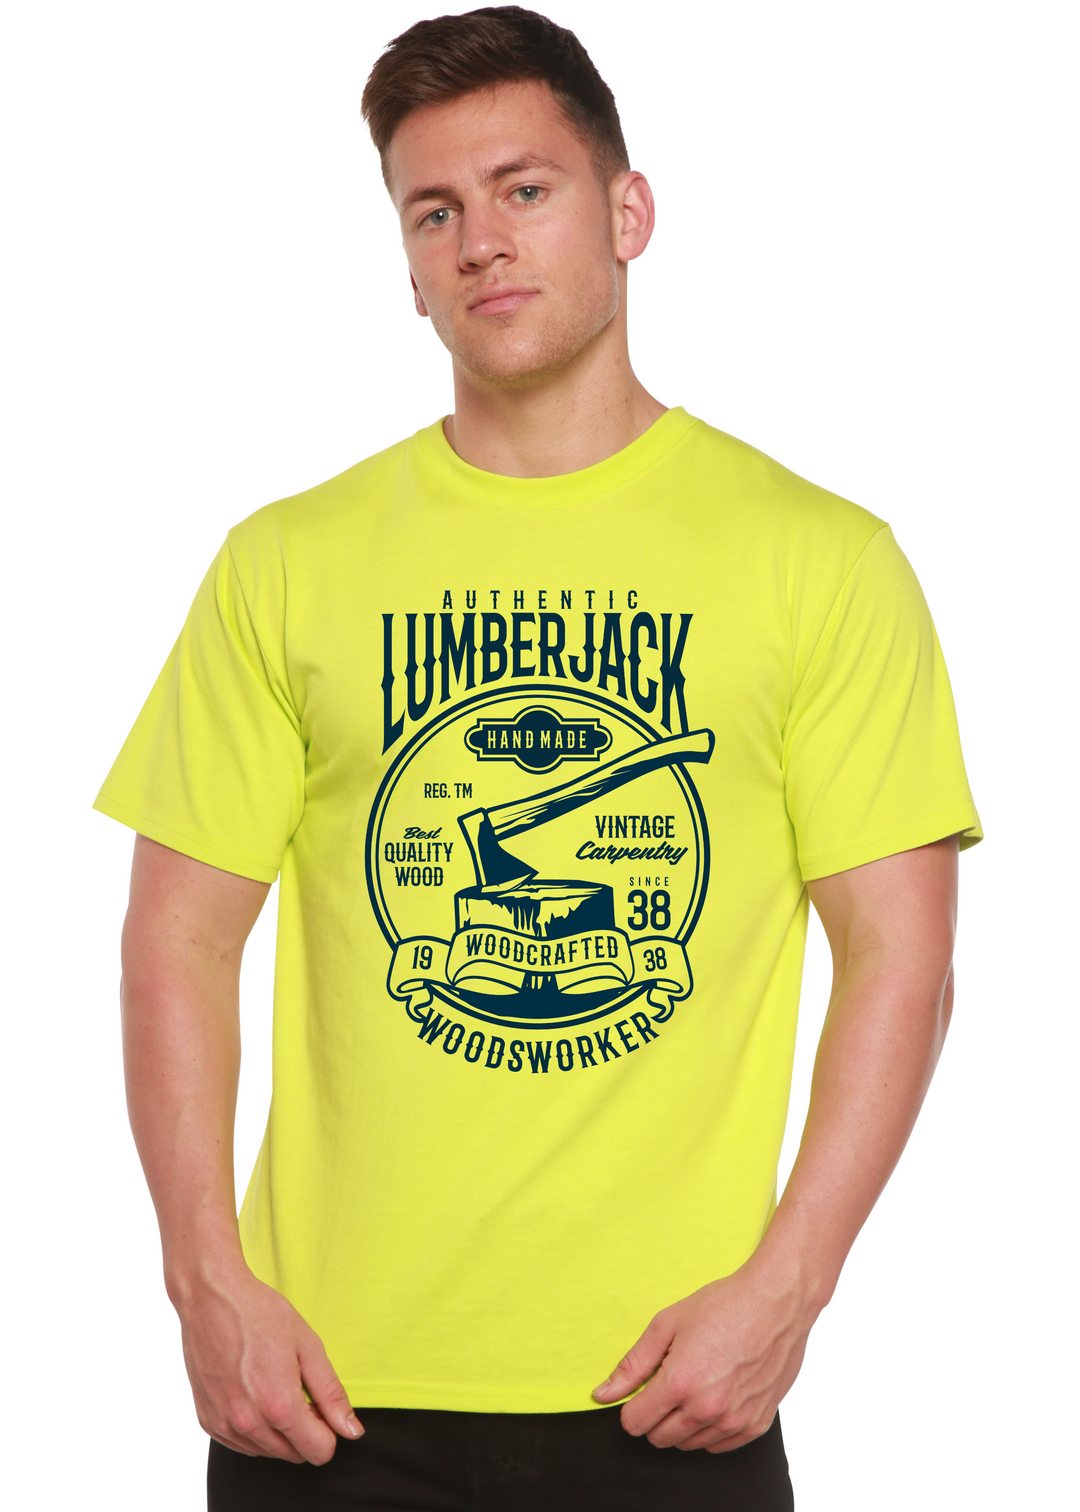 Authentic Lumberjack men's bamboo tshirt lime punch